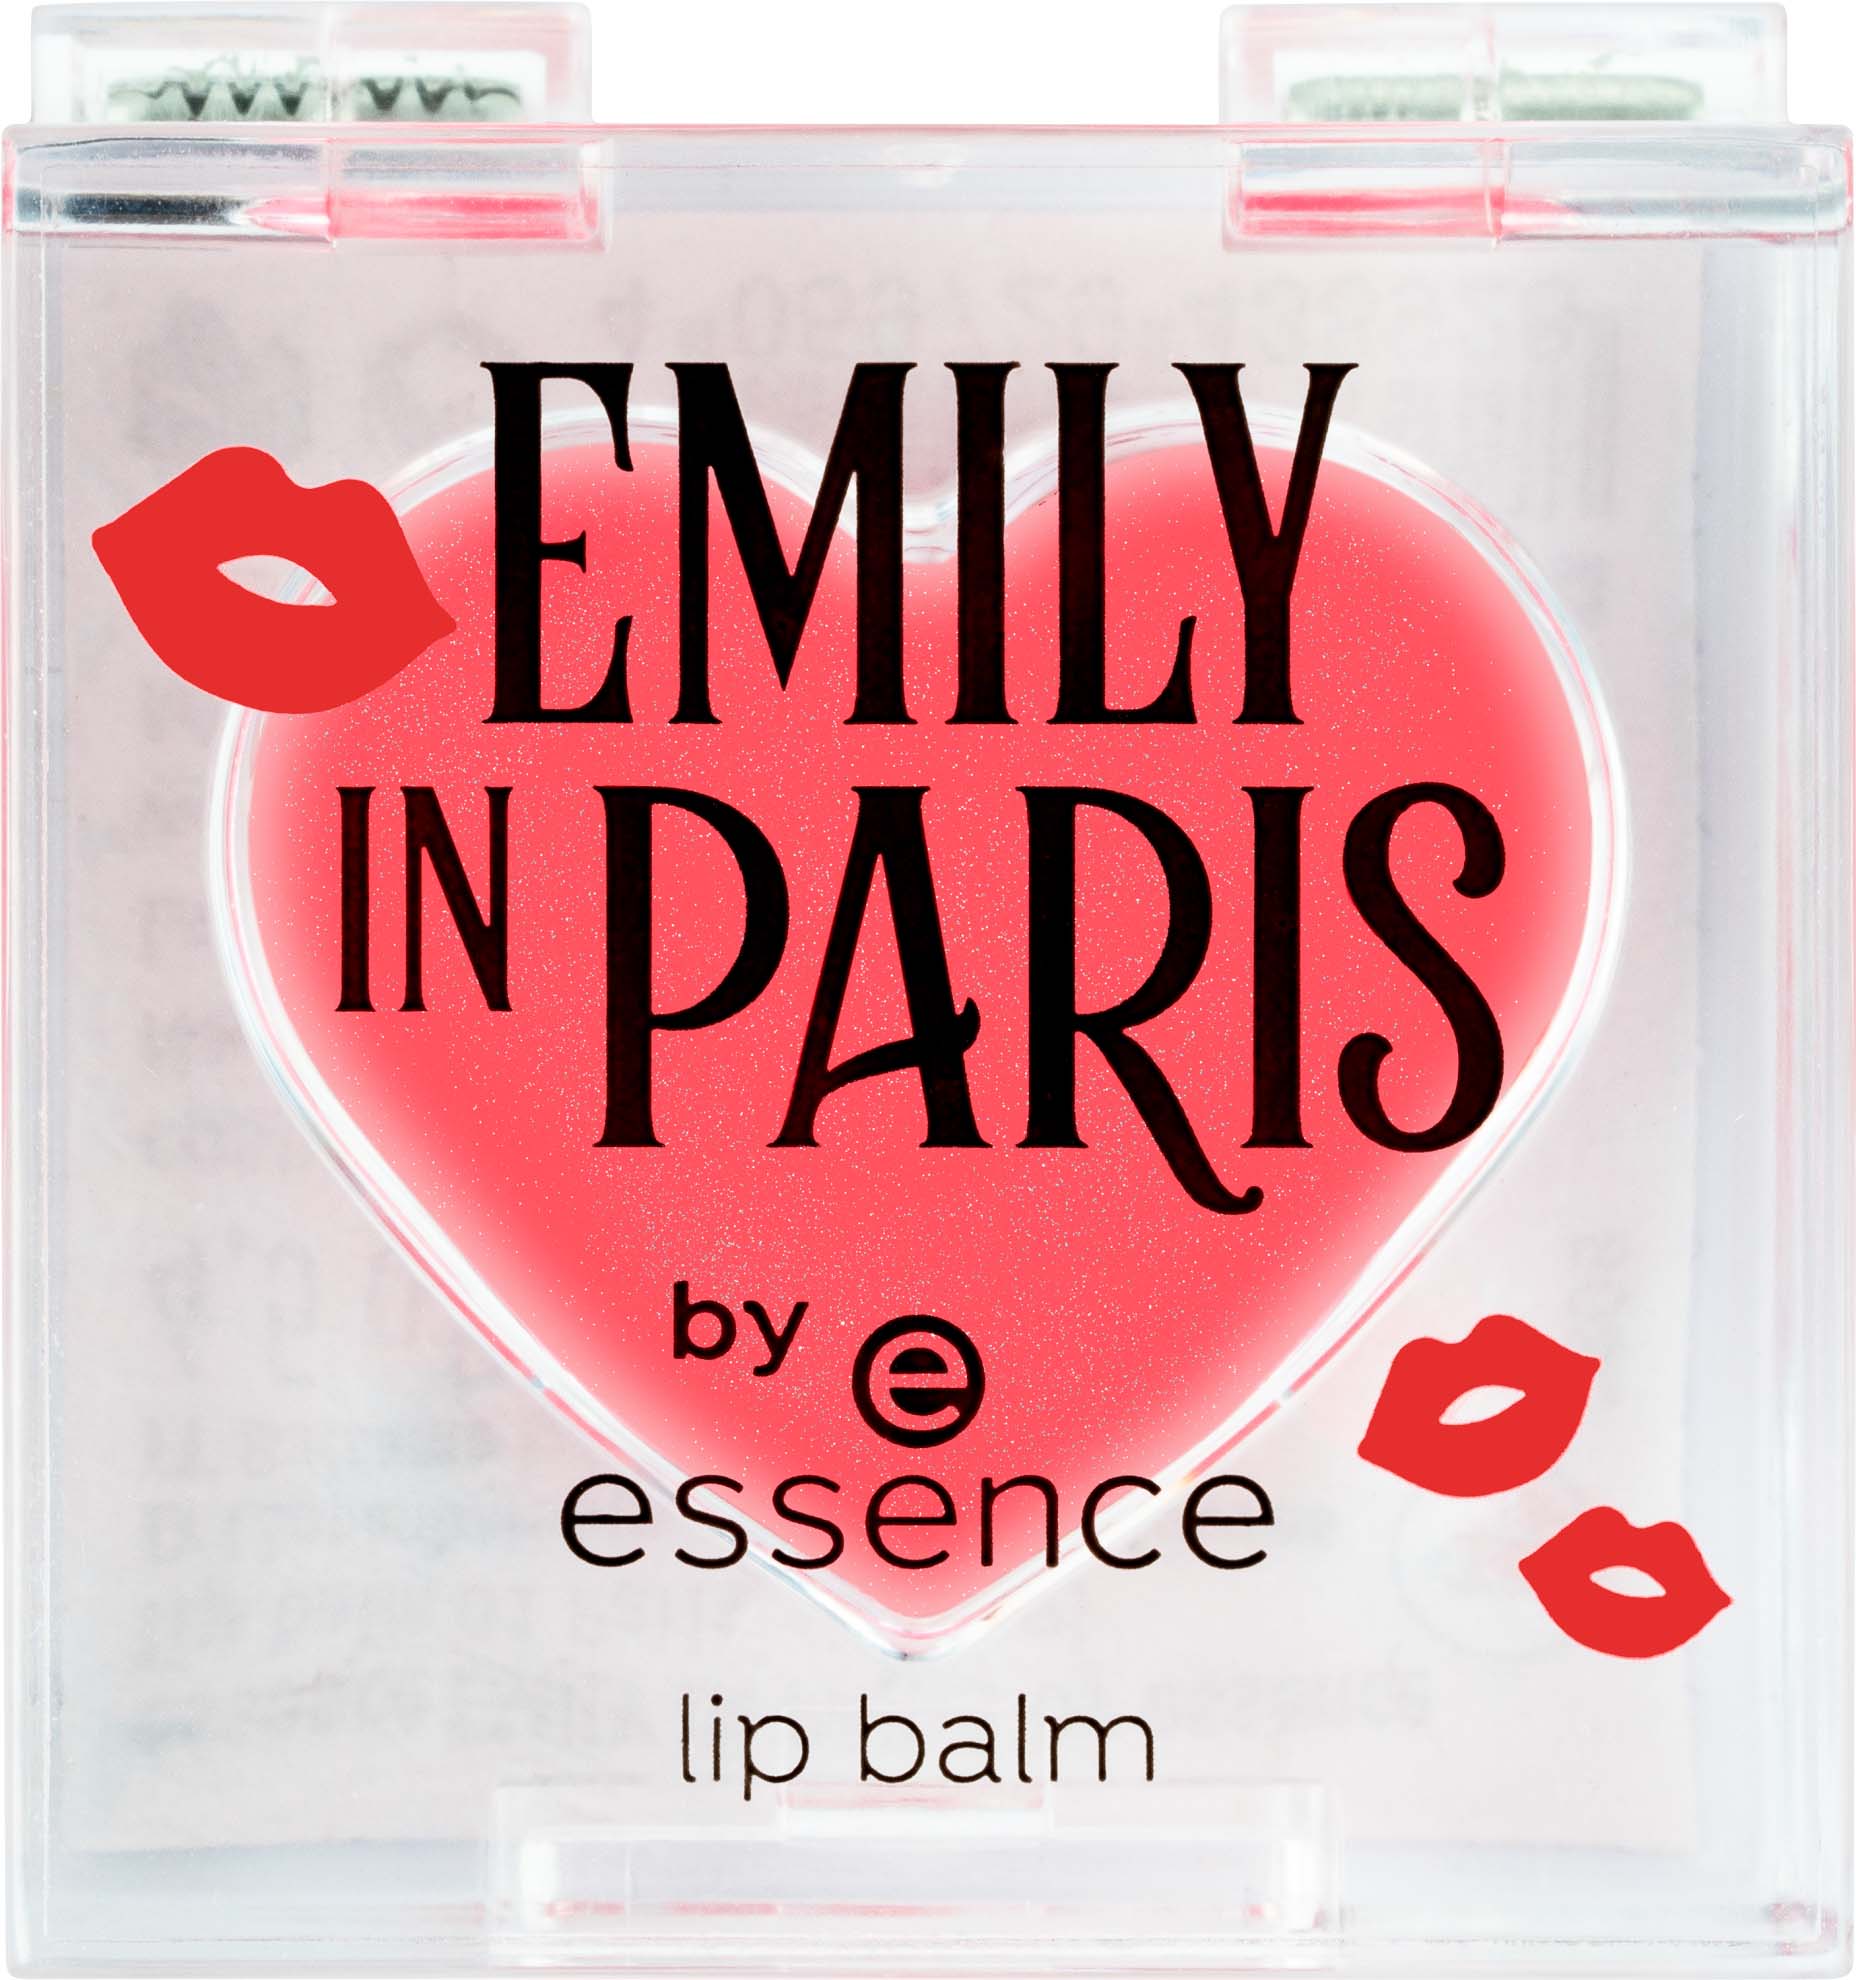 essence Emily In Lip By Paris essence Balm